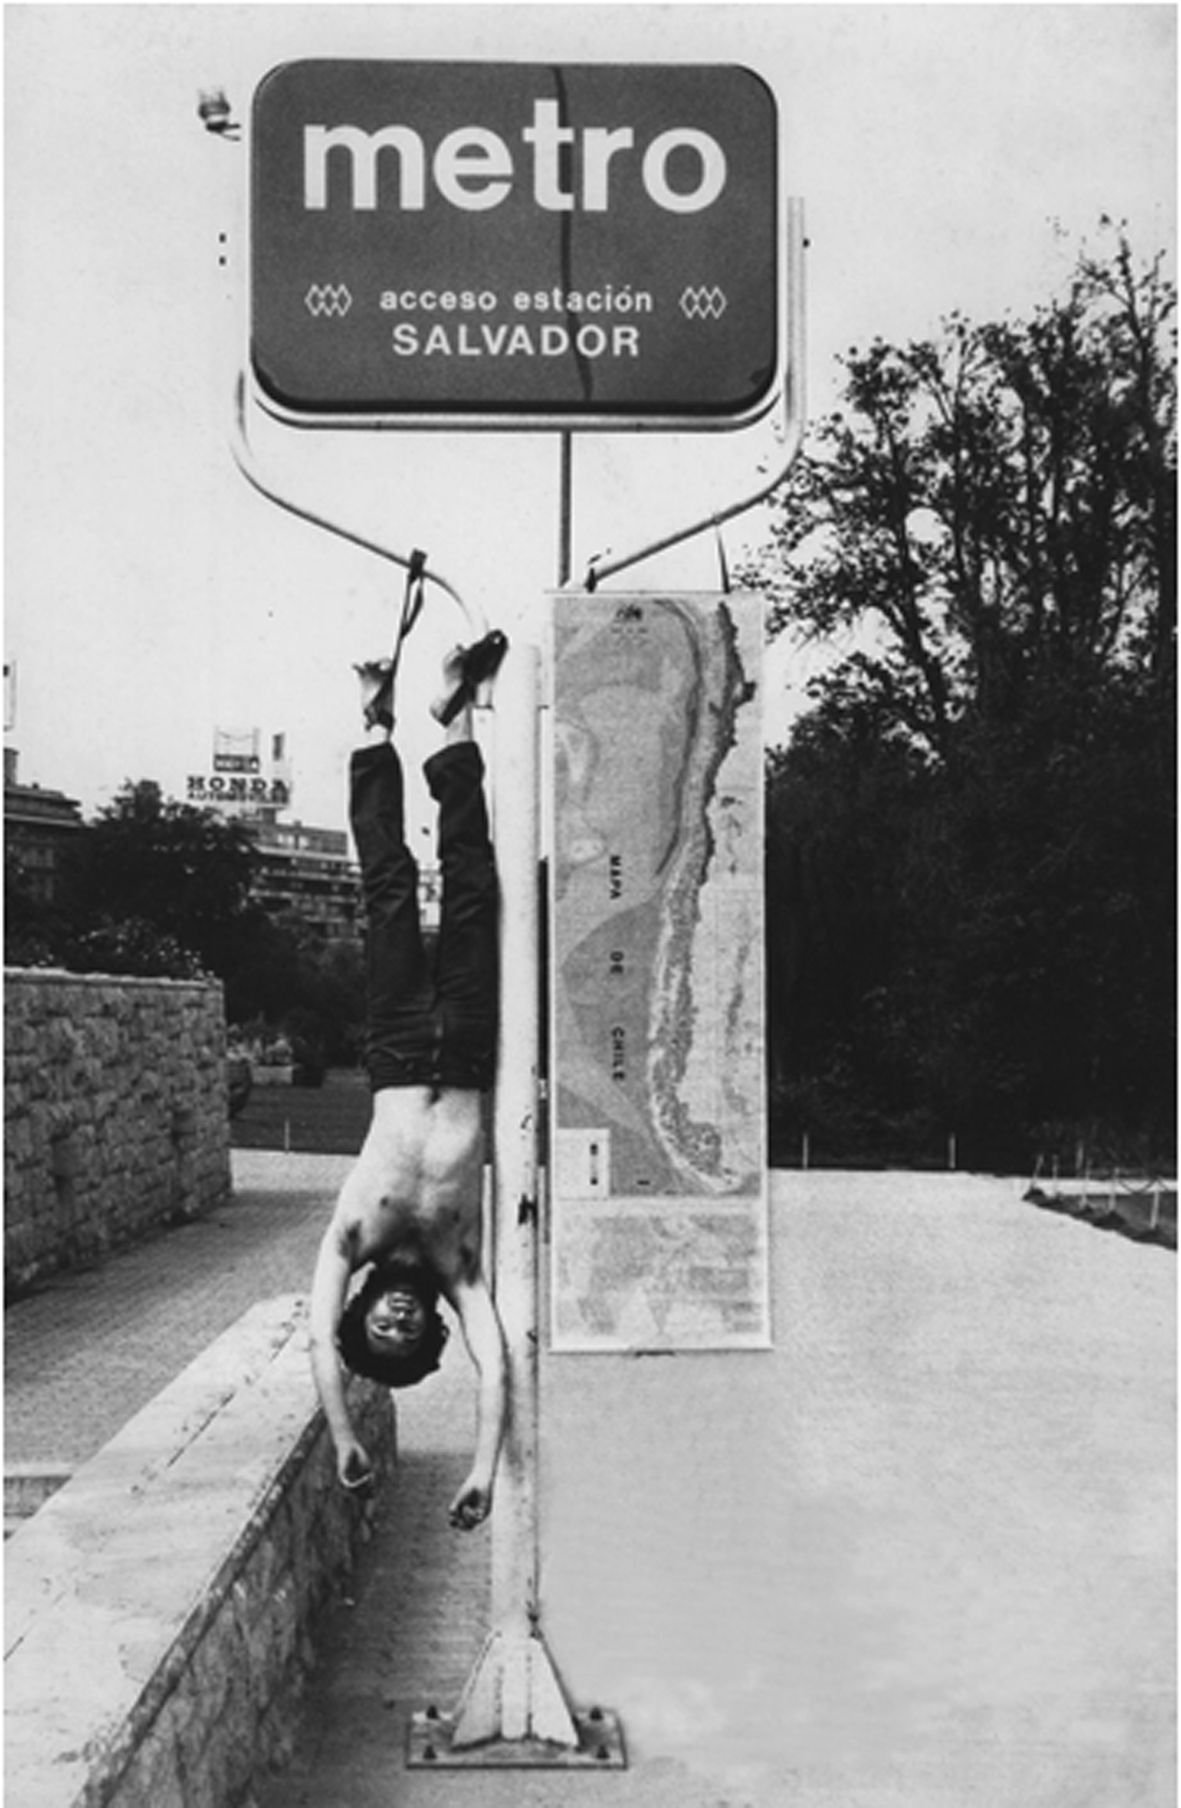 Elías Adasme, A Chile - Intervención corporal de un espacio público. Chile (1979-1980). Courtesy of the artist.